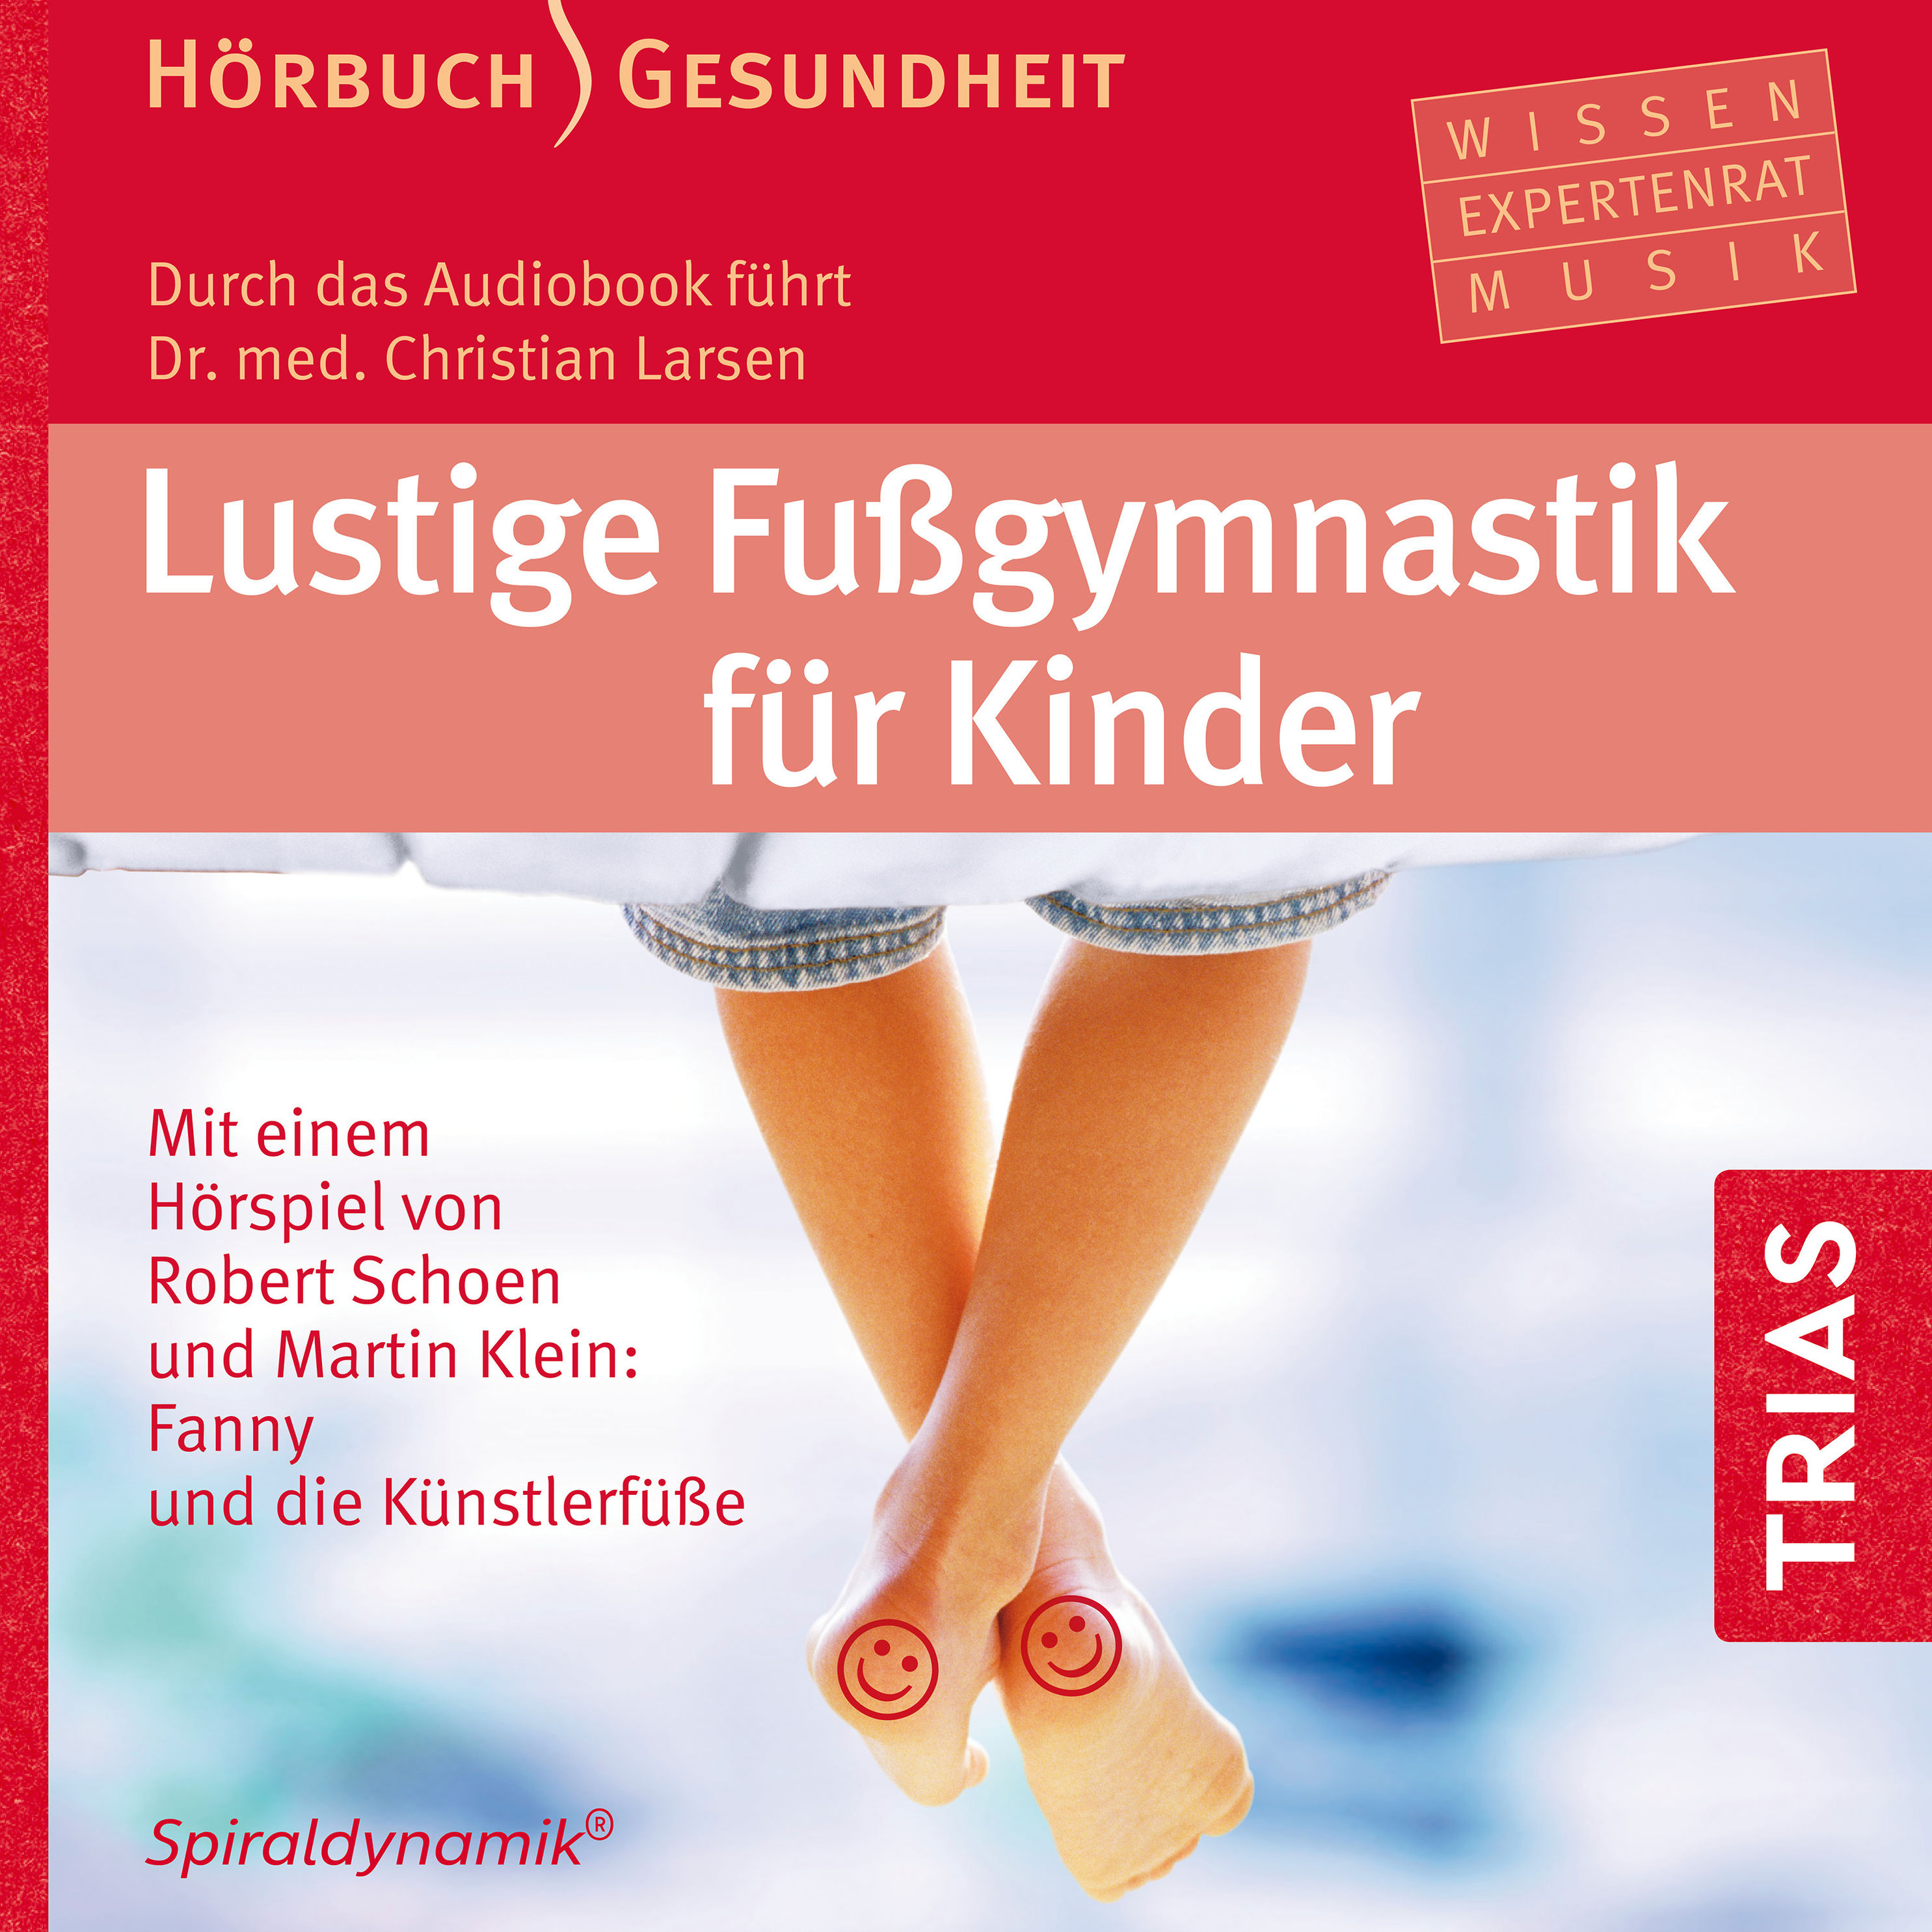 Lustige Fußgymnastik für Kinder Hörbuch Download | Weltbild